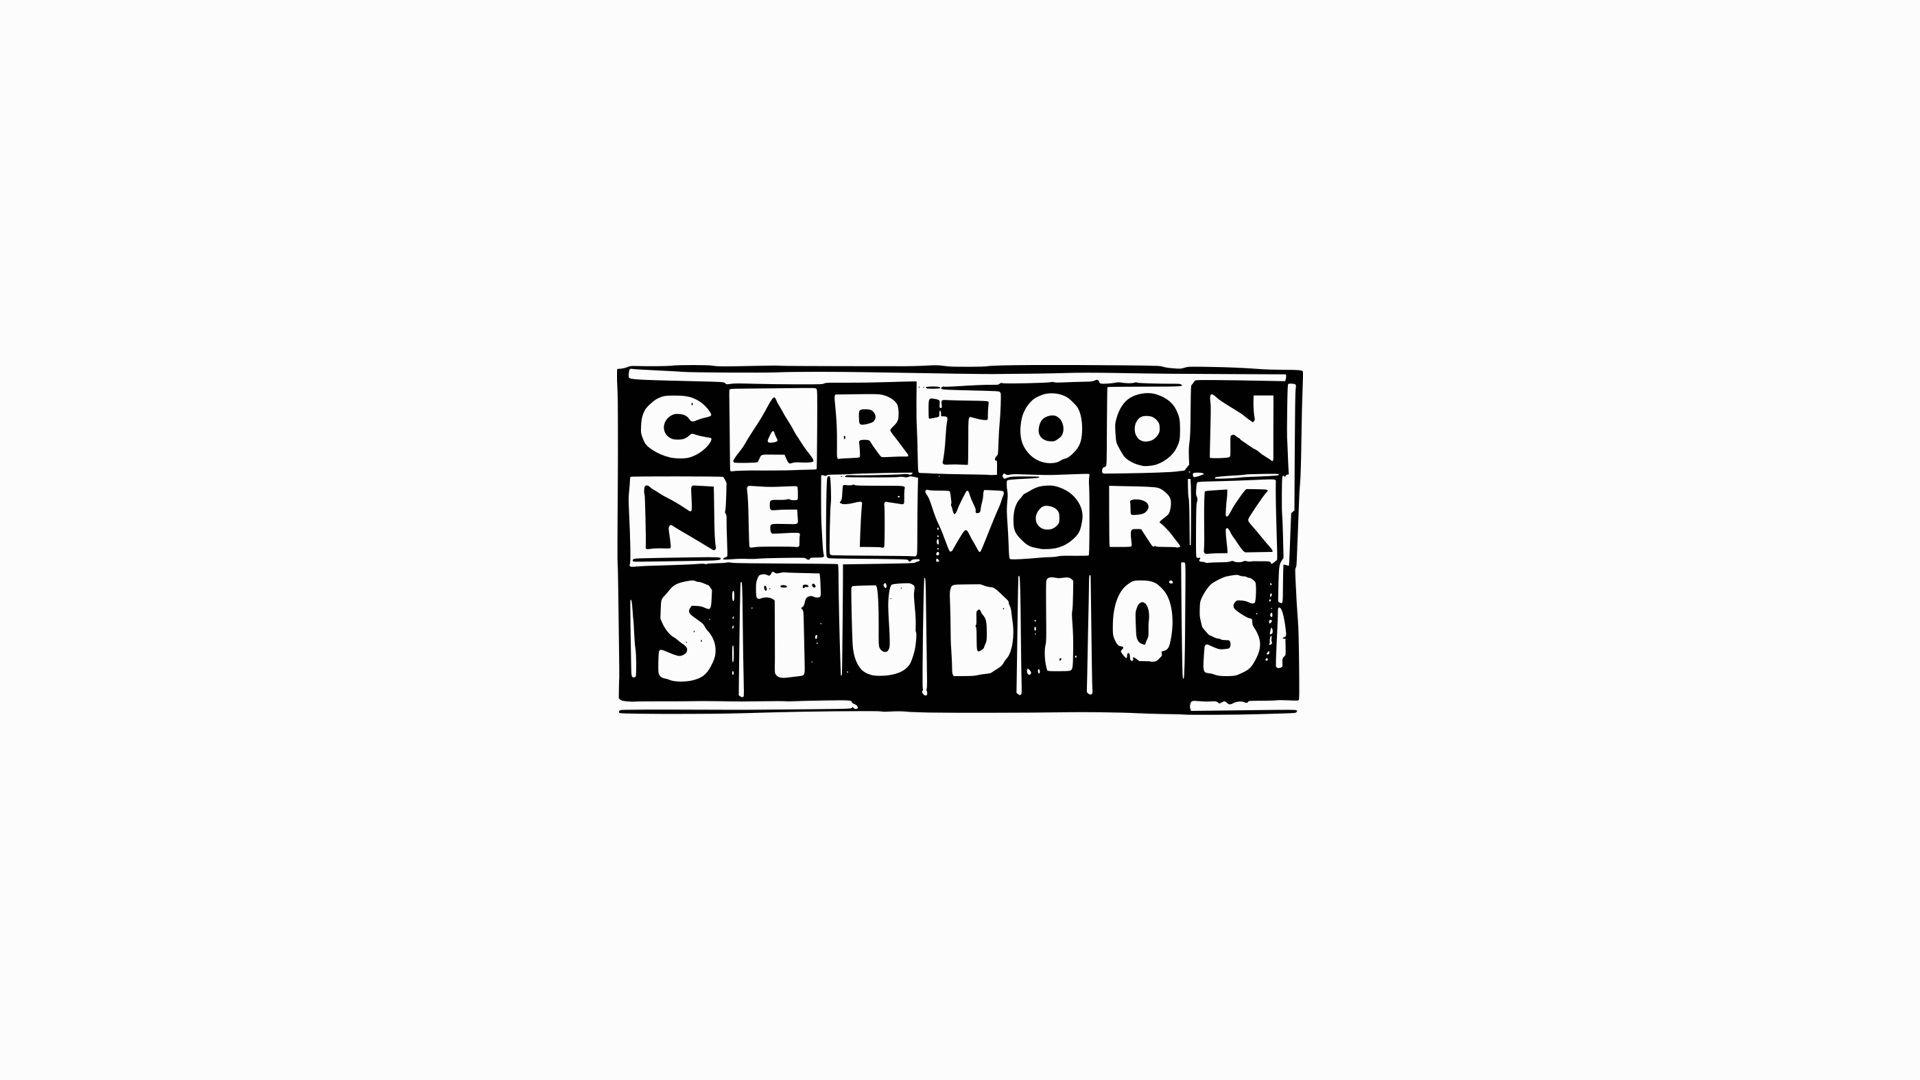 Cartoon Network 2017 Logo - Image - Cartoon Network Studios Logo (2004; Widescreen).jpg ...